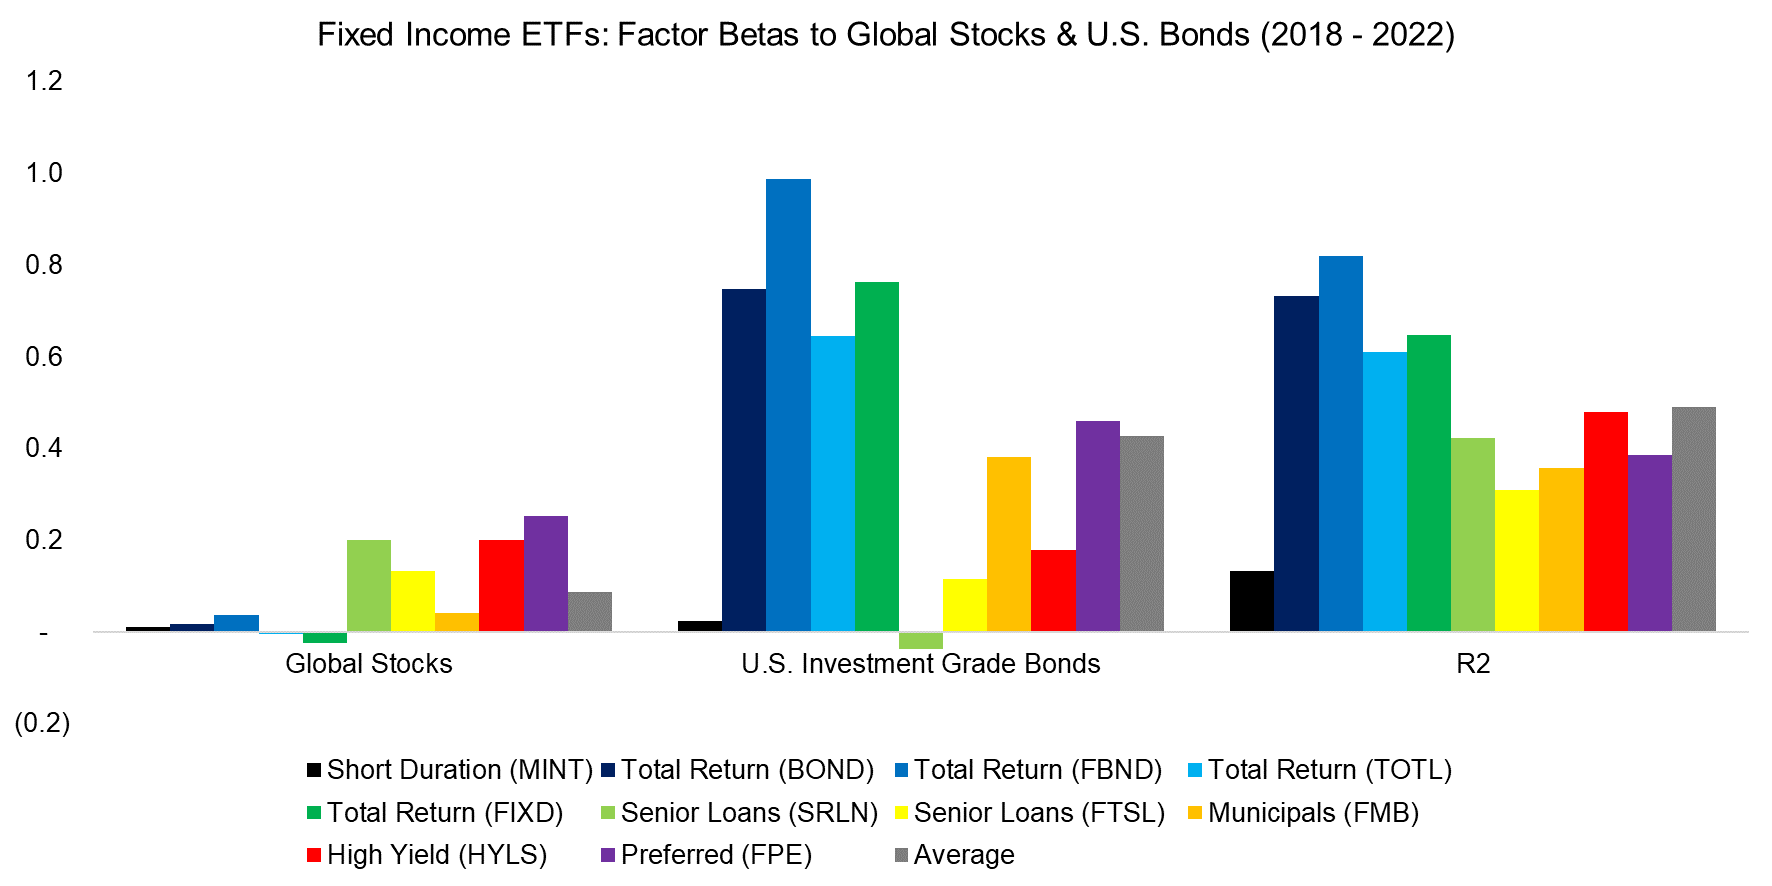 Fixed Income ETFs Factor Betas to Global Stocks & U.S. Bonds (2018 - 2022)